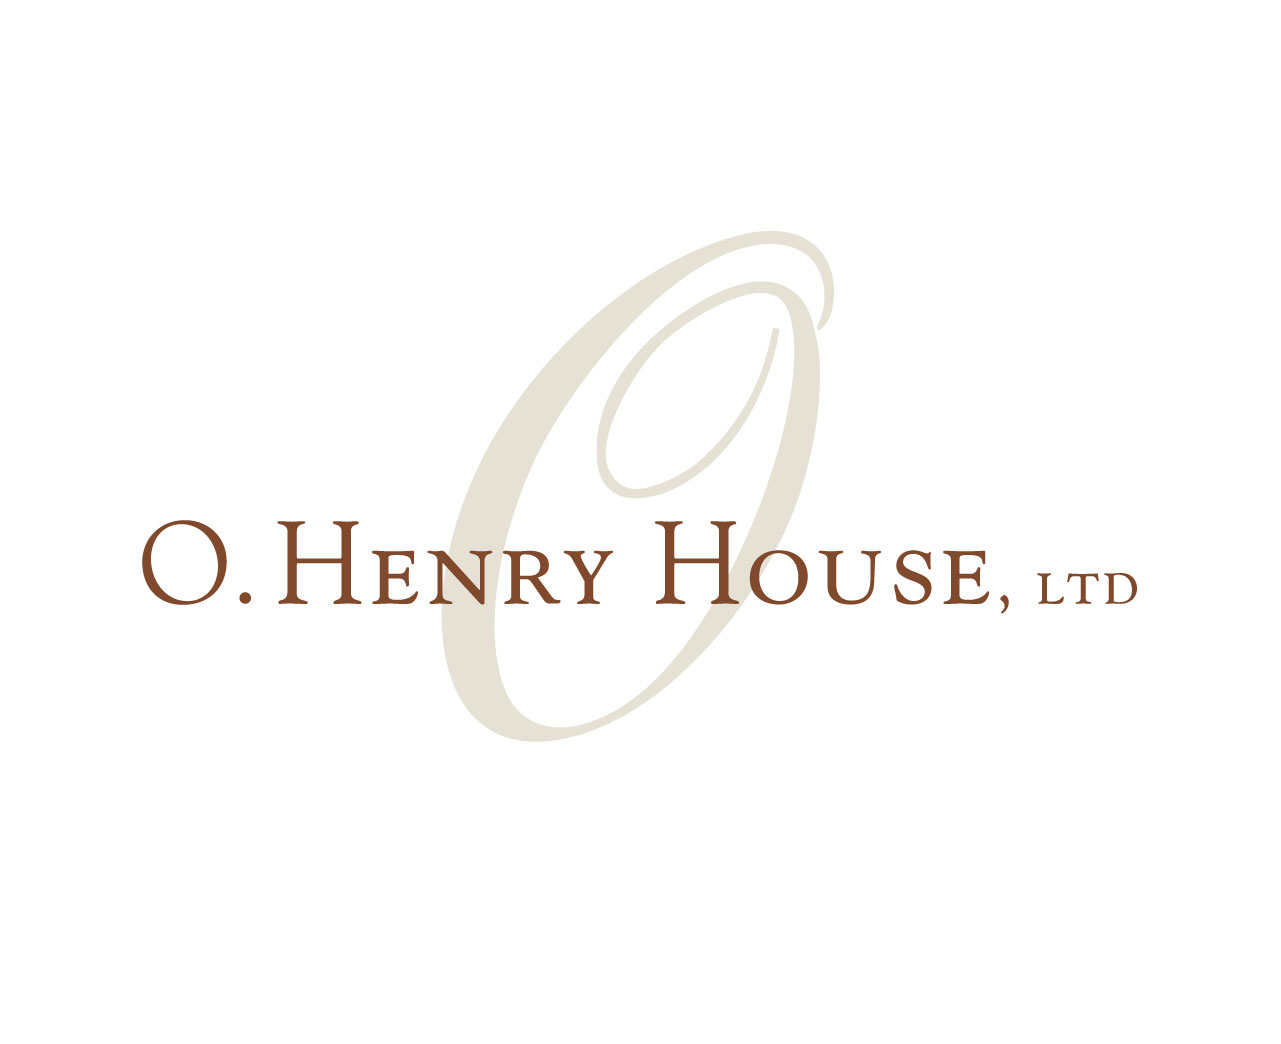 O. Henry House Logo